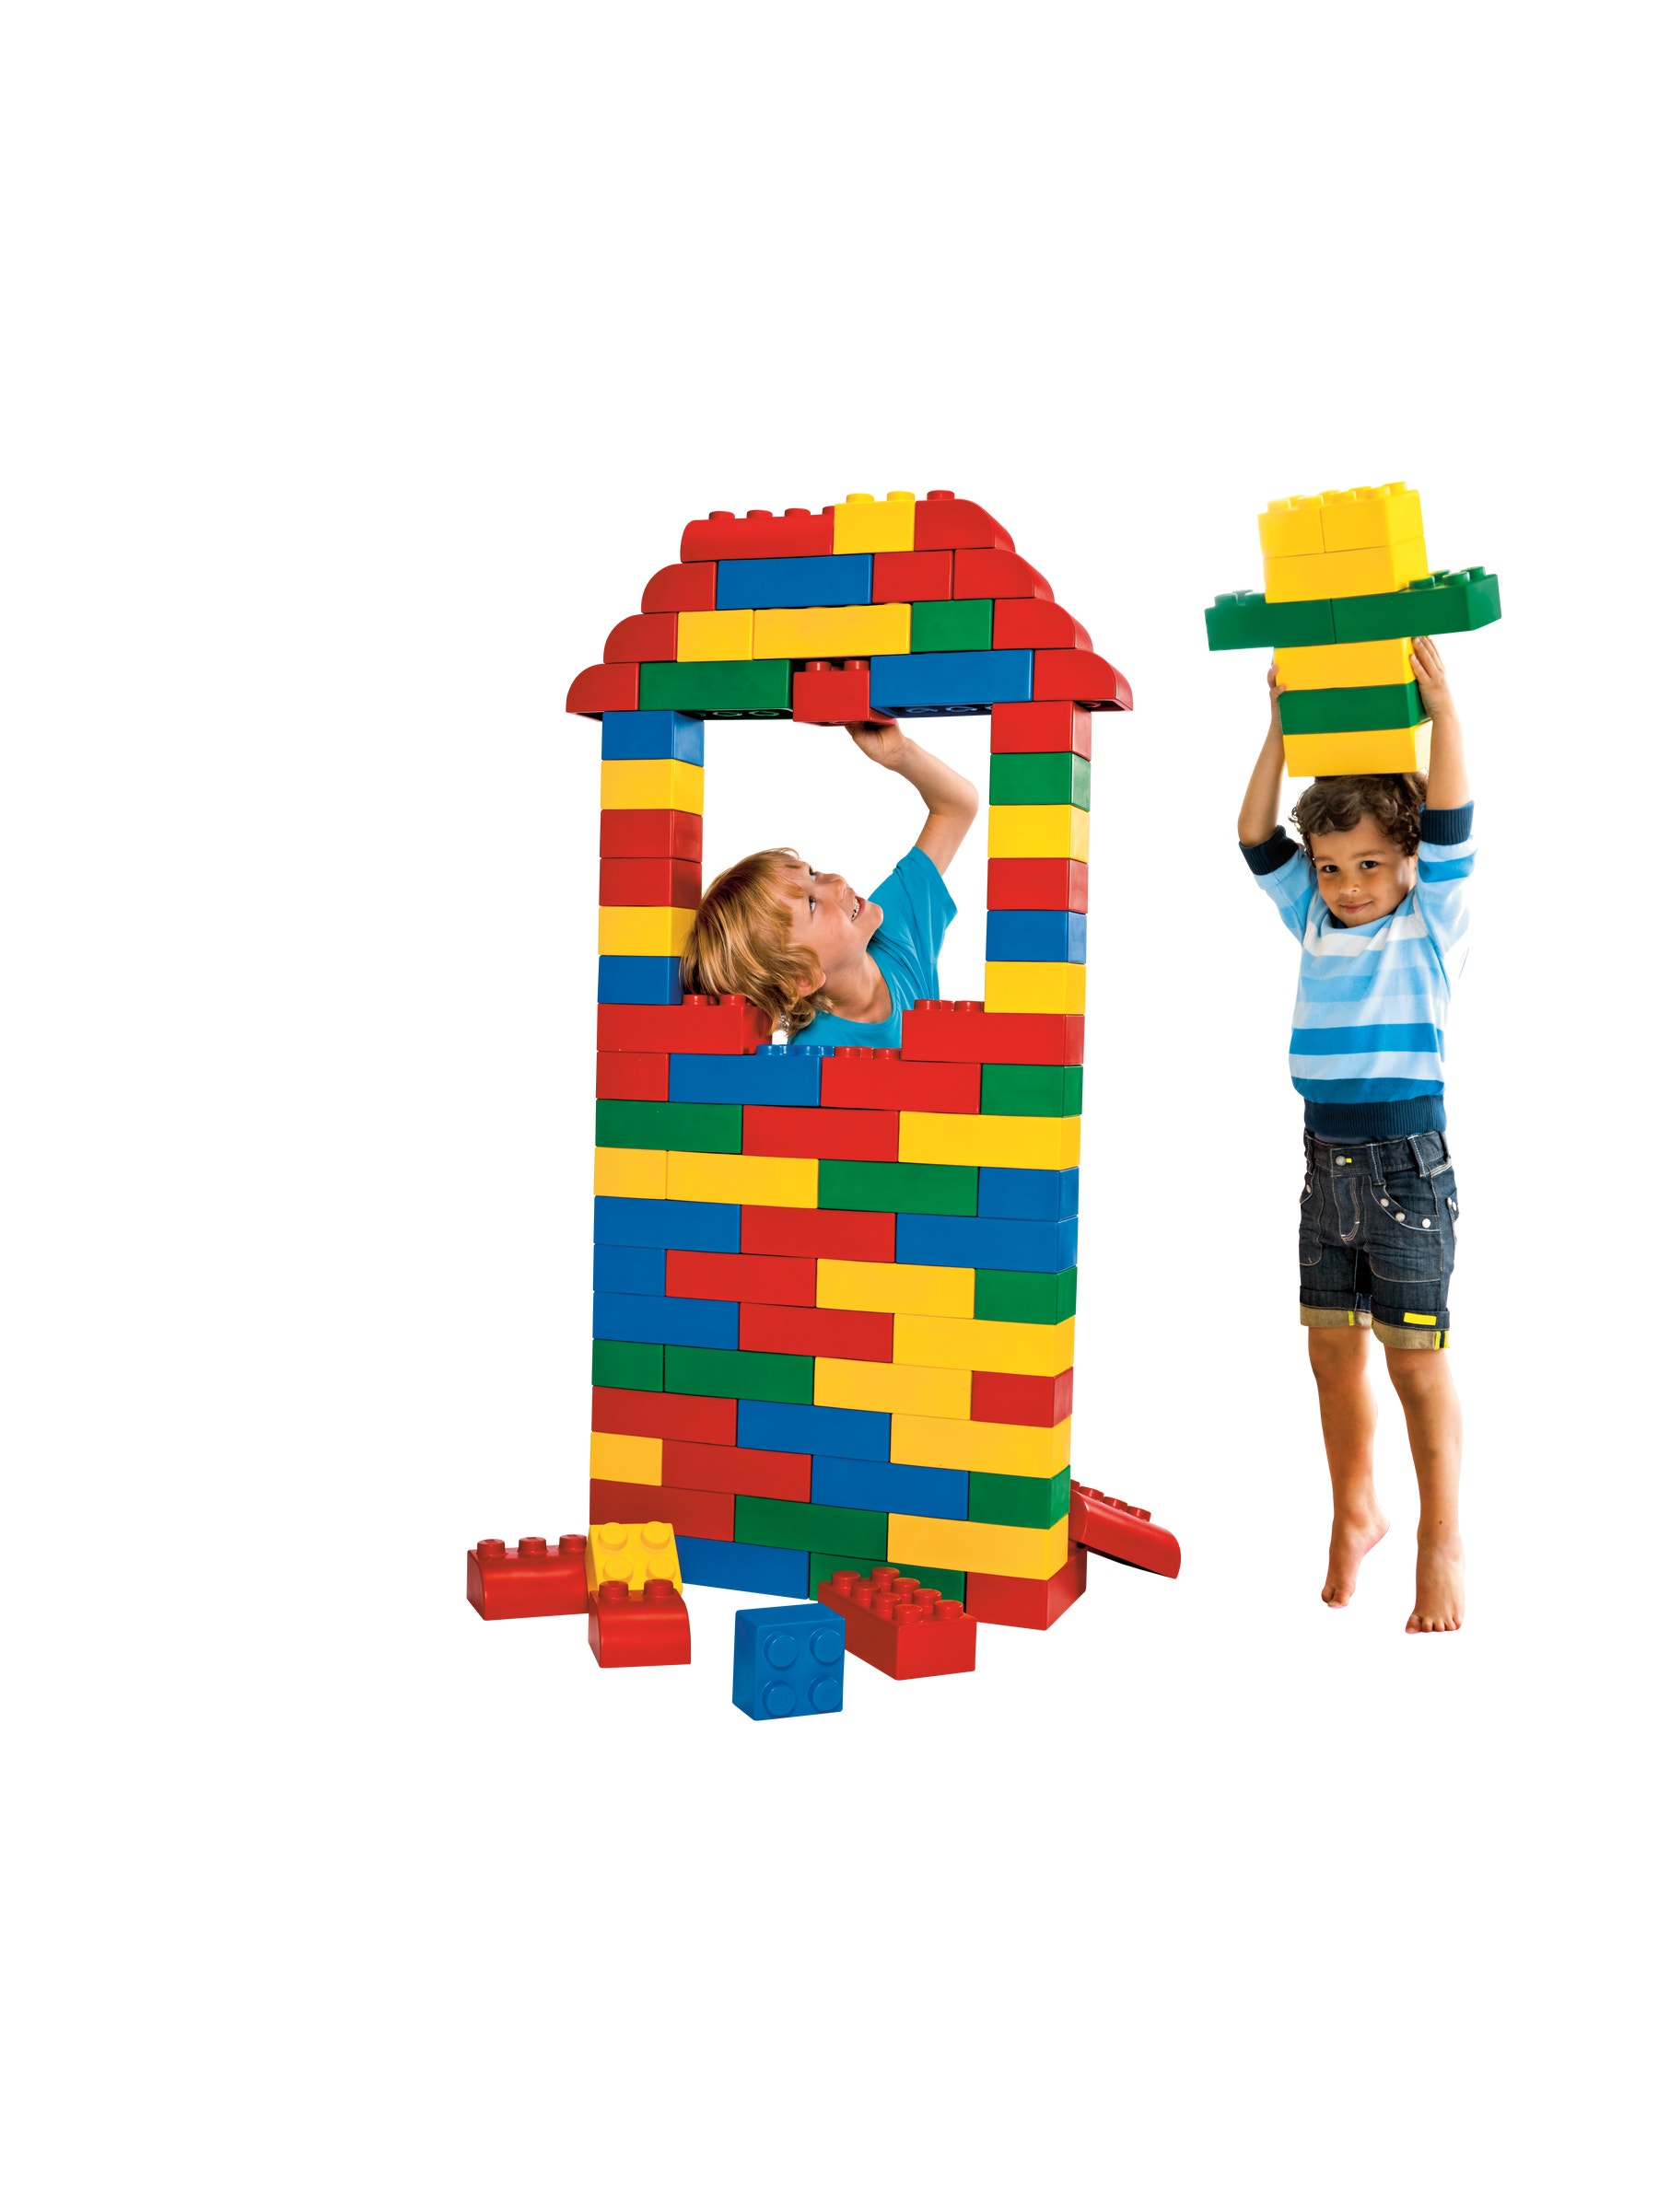 Daisy liv kontakt 45003 LEGO Soft Brick Set | LEGO® Education | Product Resources & Support